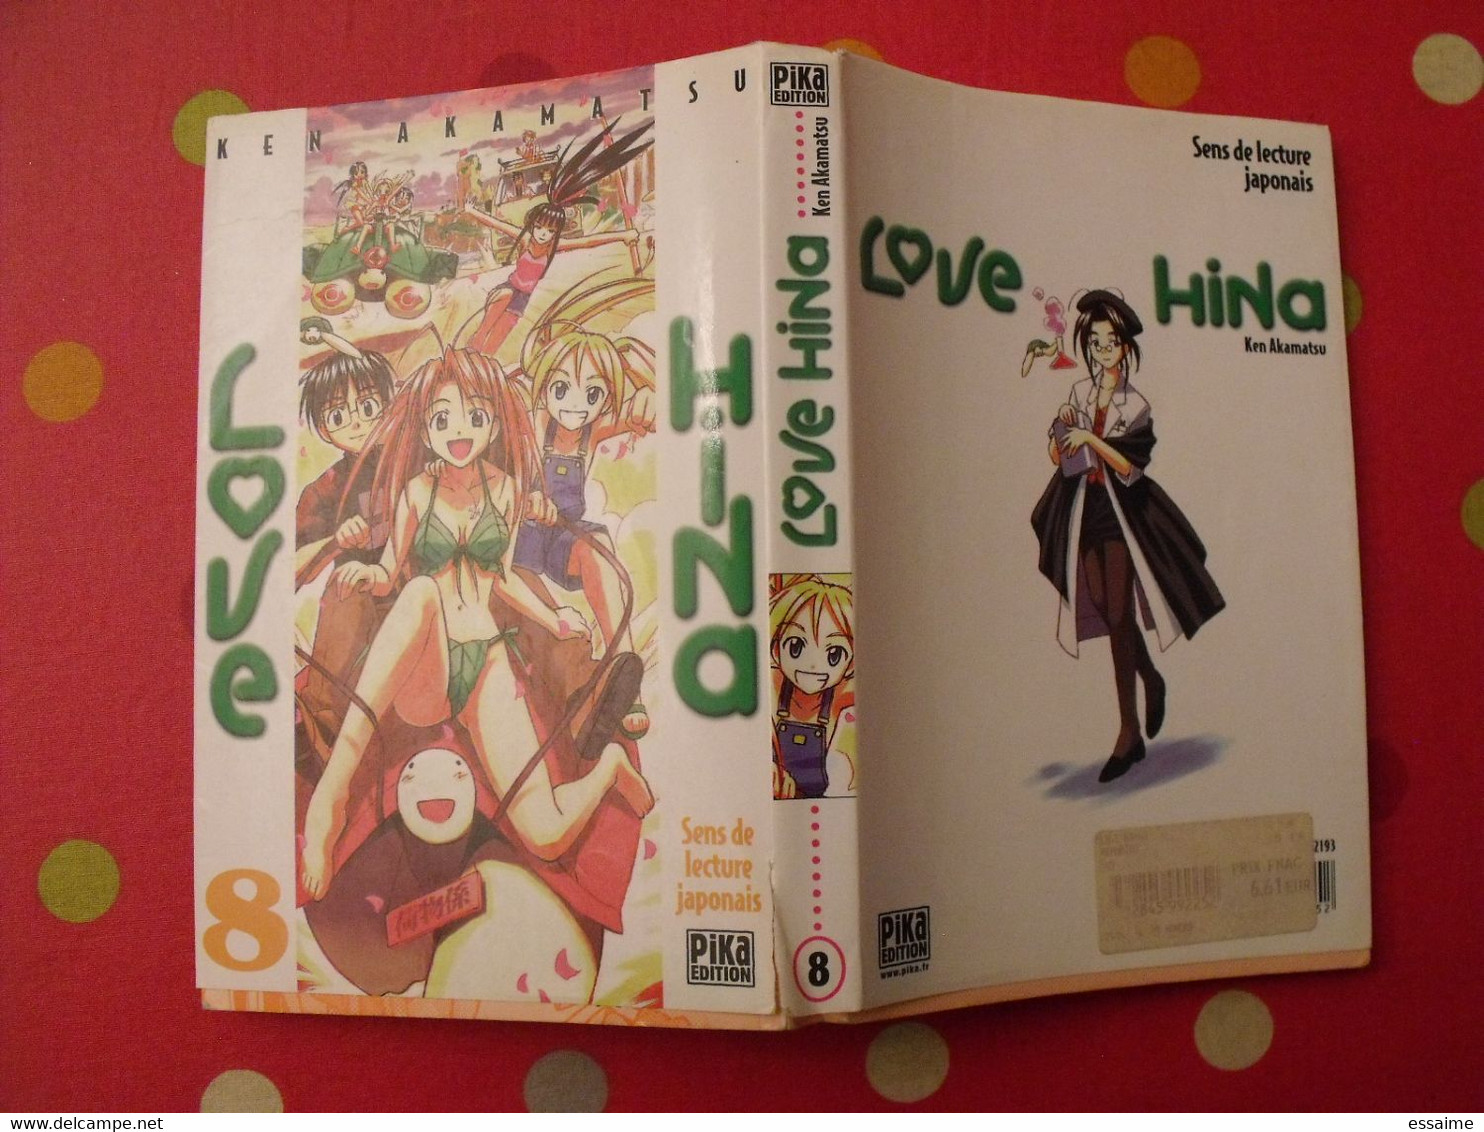 lot de 12 tomes de "Love Hina". Ken Akamatsu. Pika édition 2002-04.